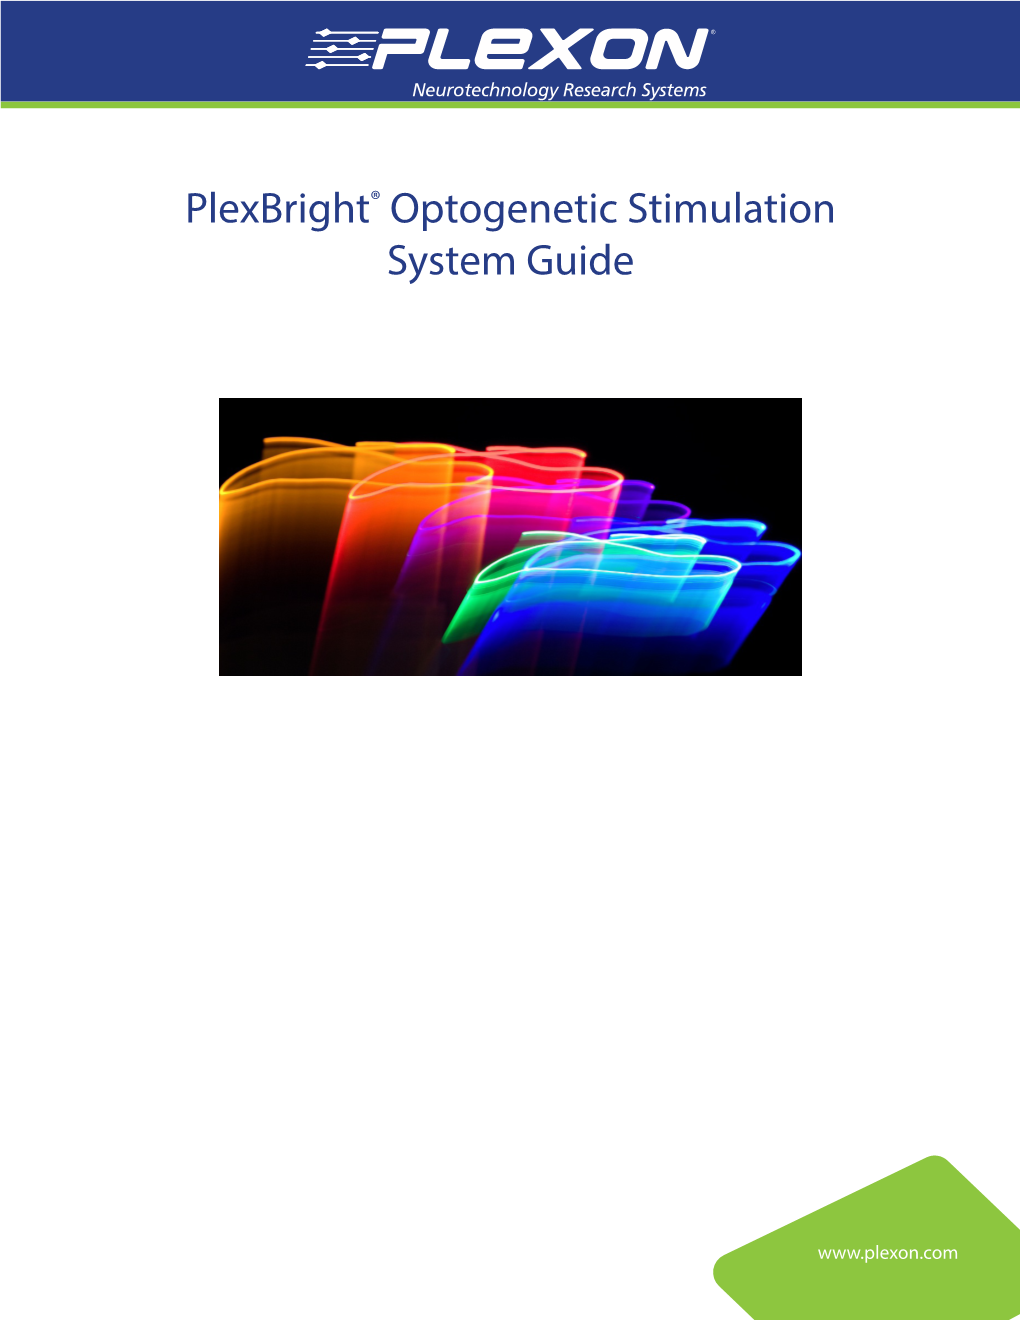 Plexbright® Optogenetic Stimulation System Guide